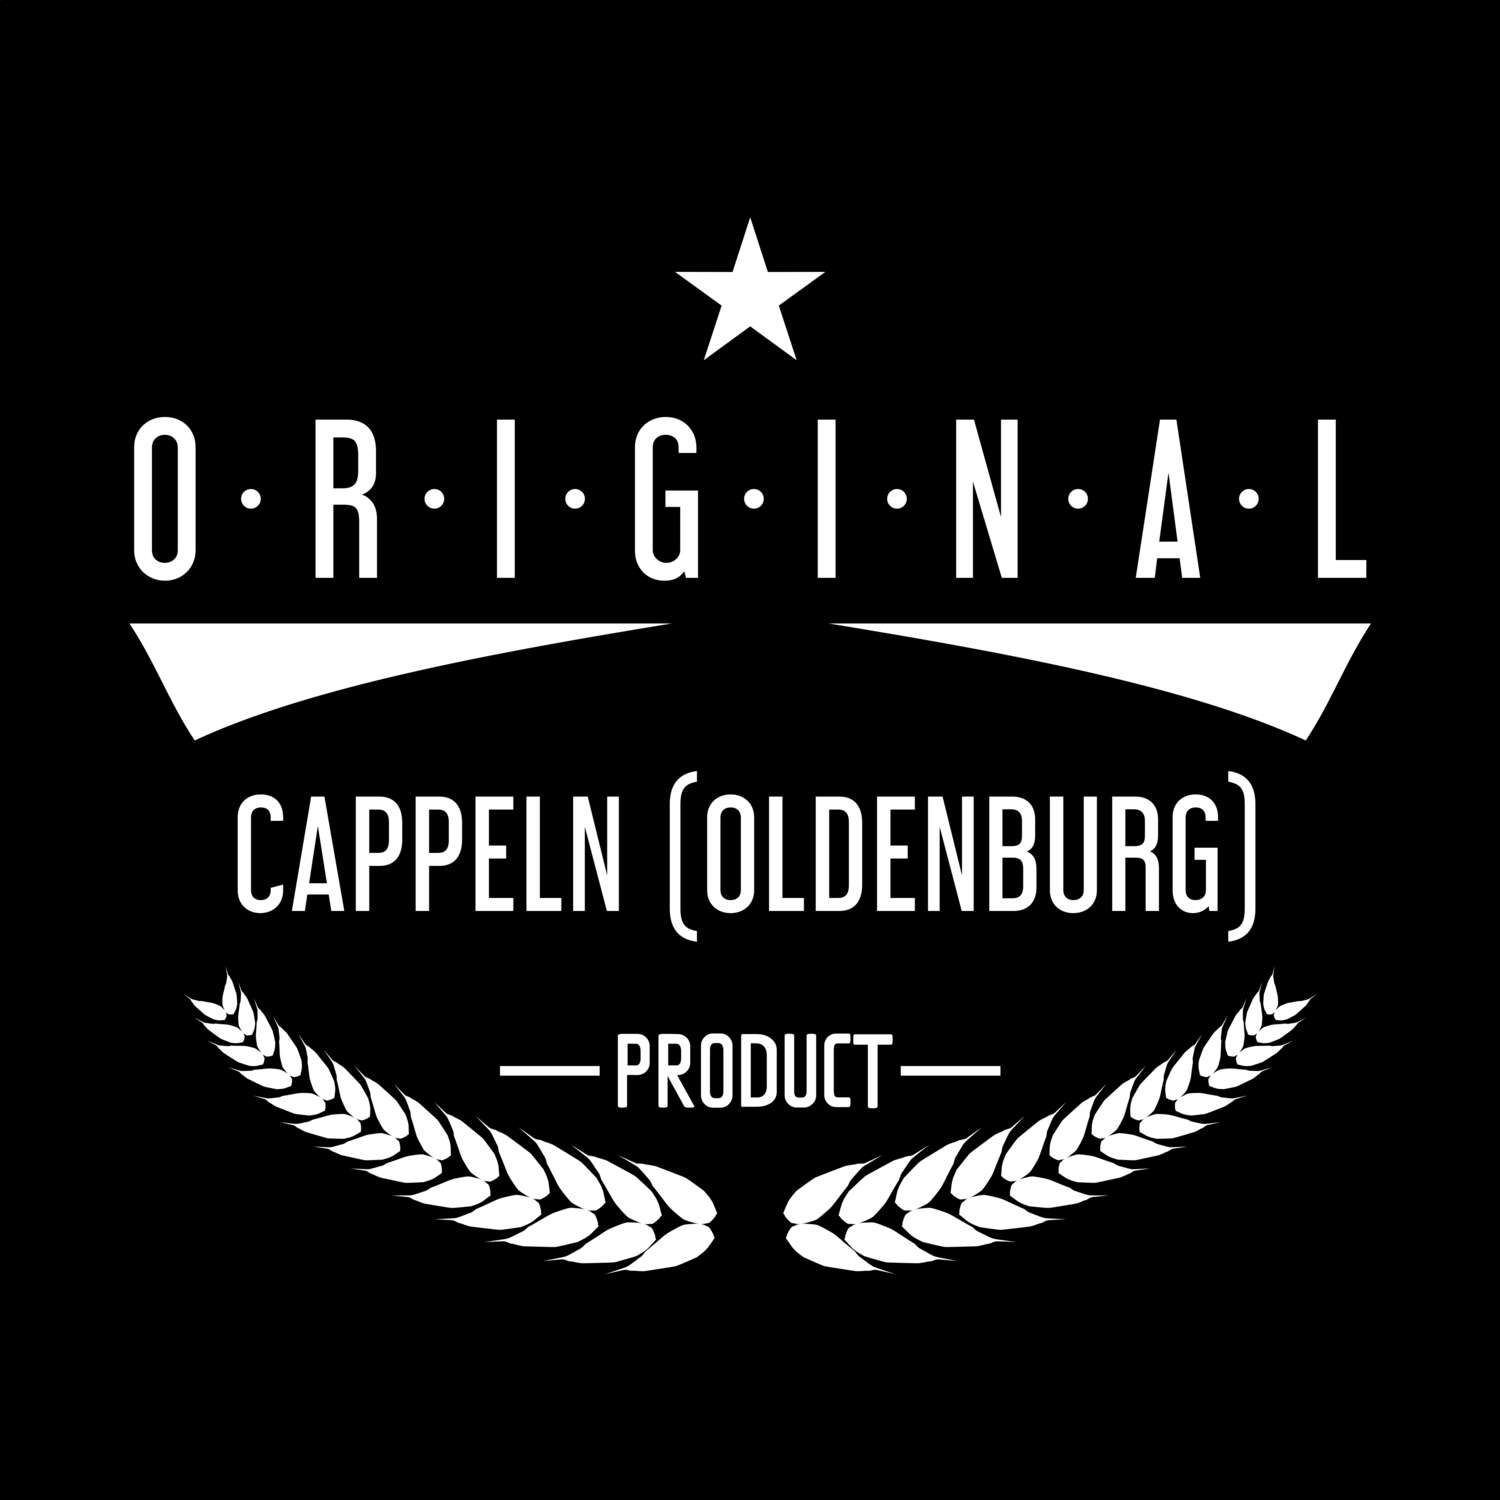 Cappeln (Oldenburg) T-Shirt »Original Product«